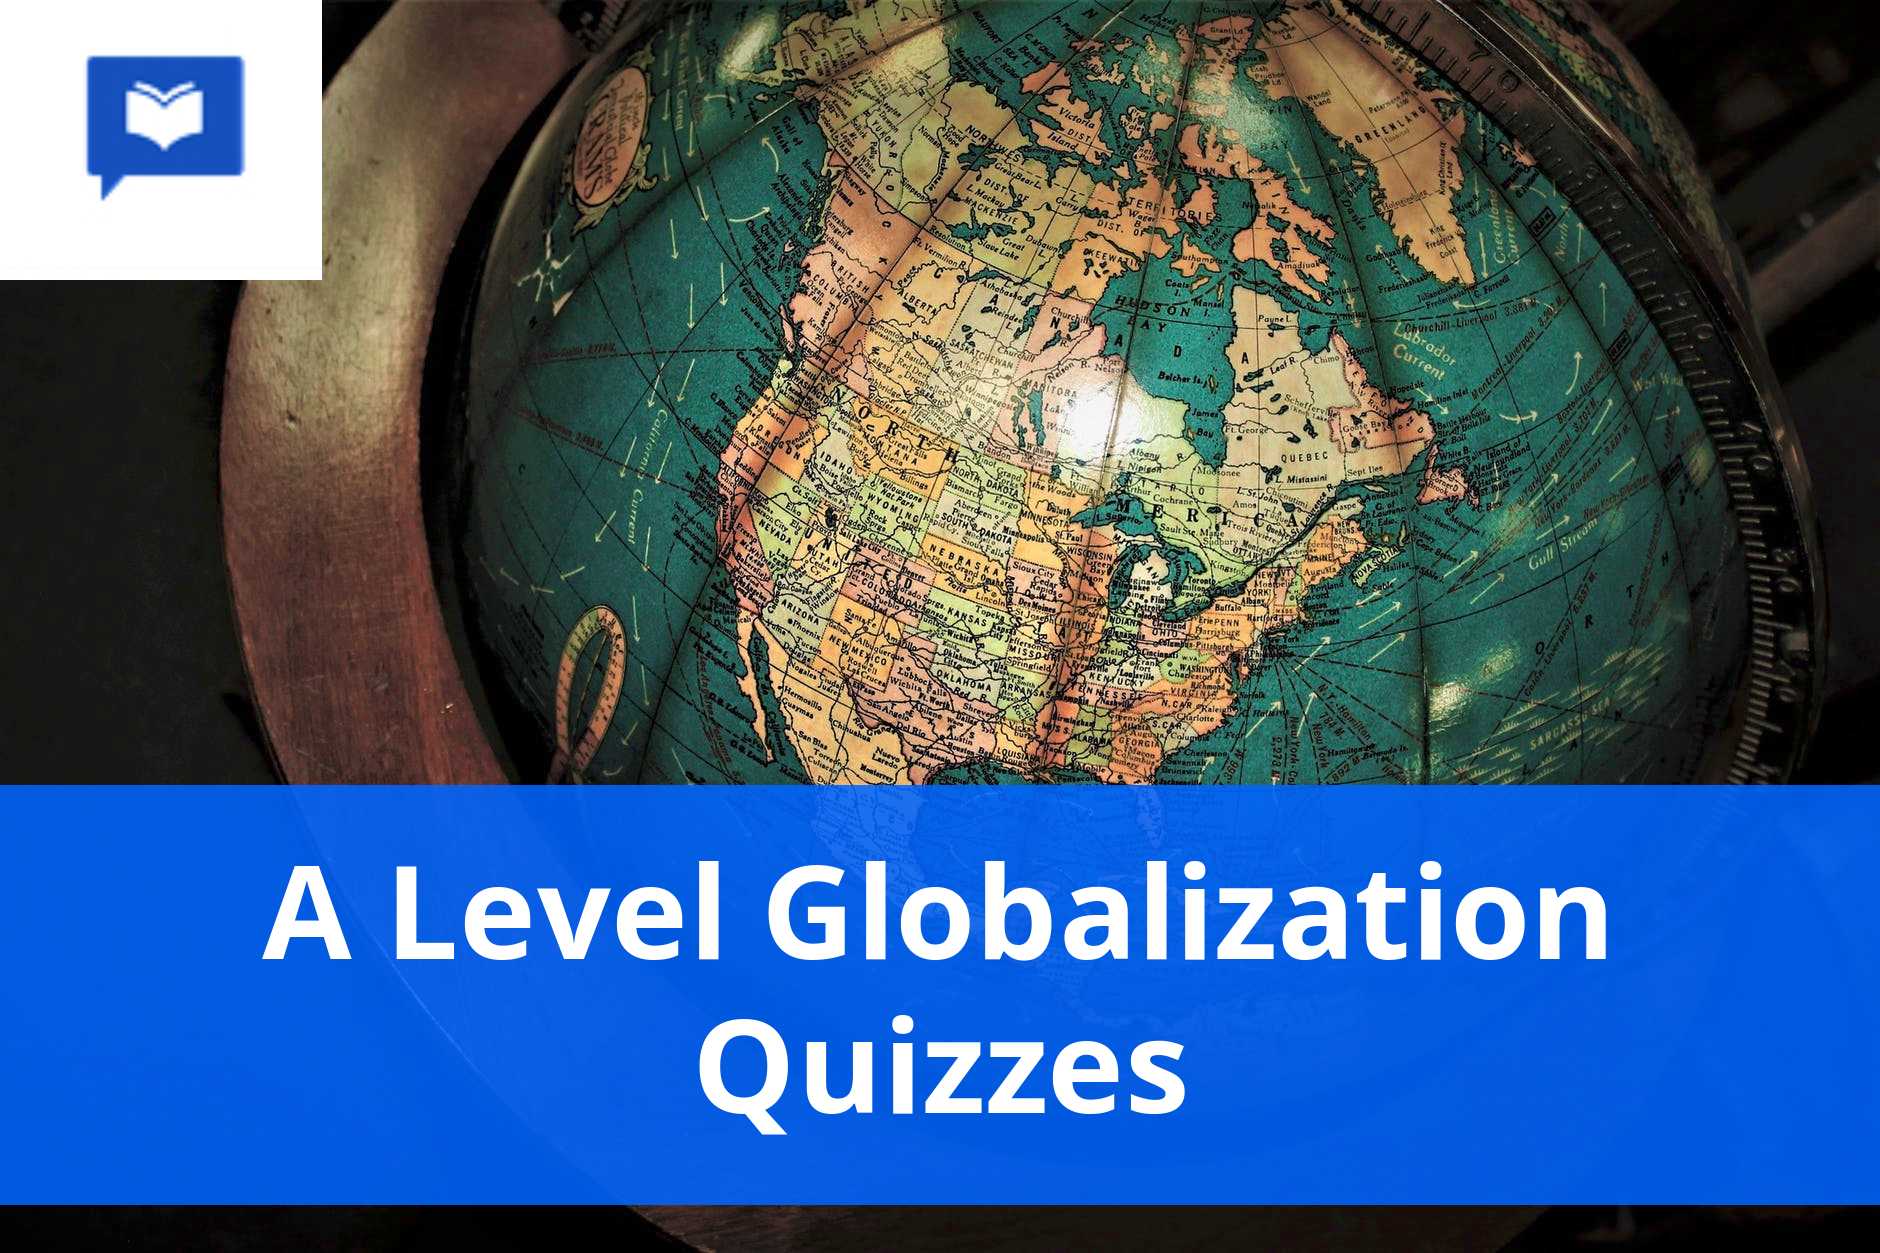 A level Globalization Quizzes